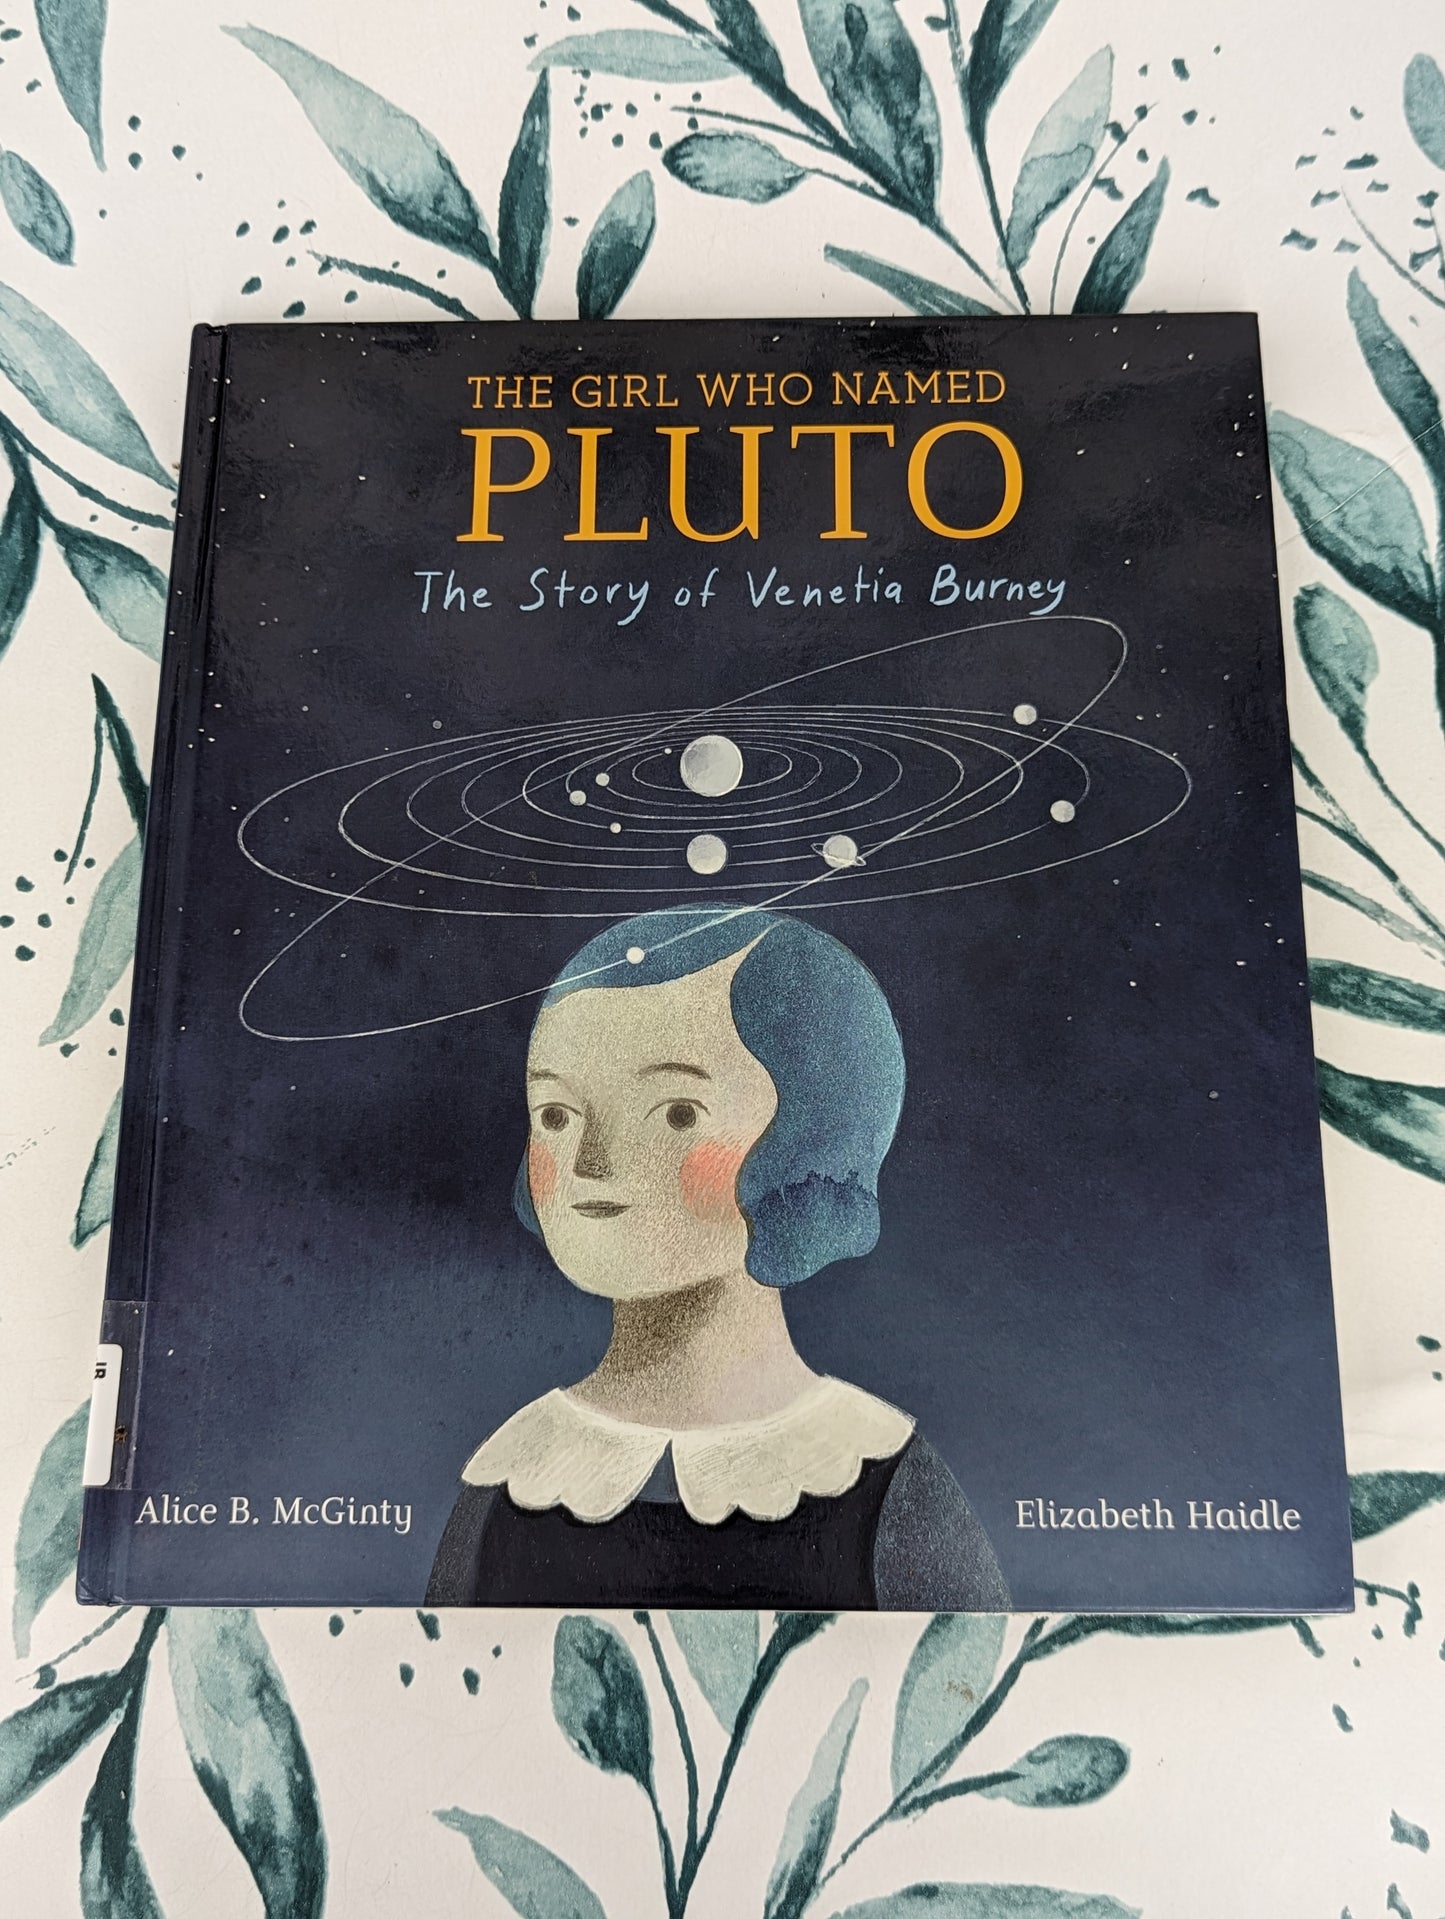 The Girl Who Named Pluto: The Story of Venetia Burney